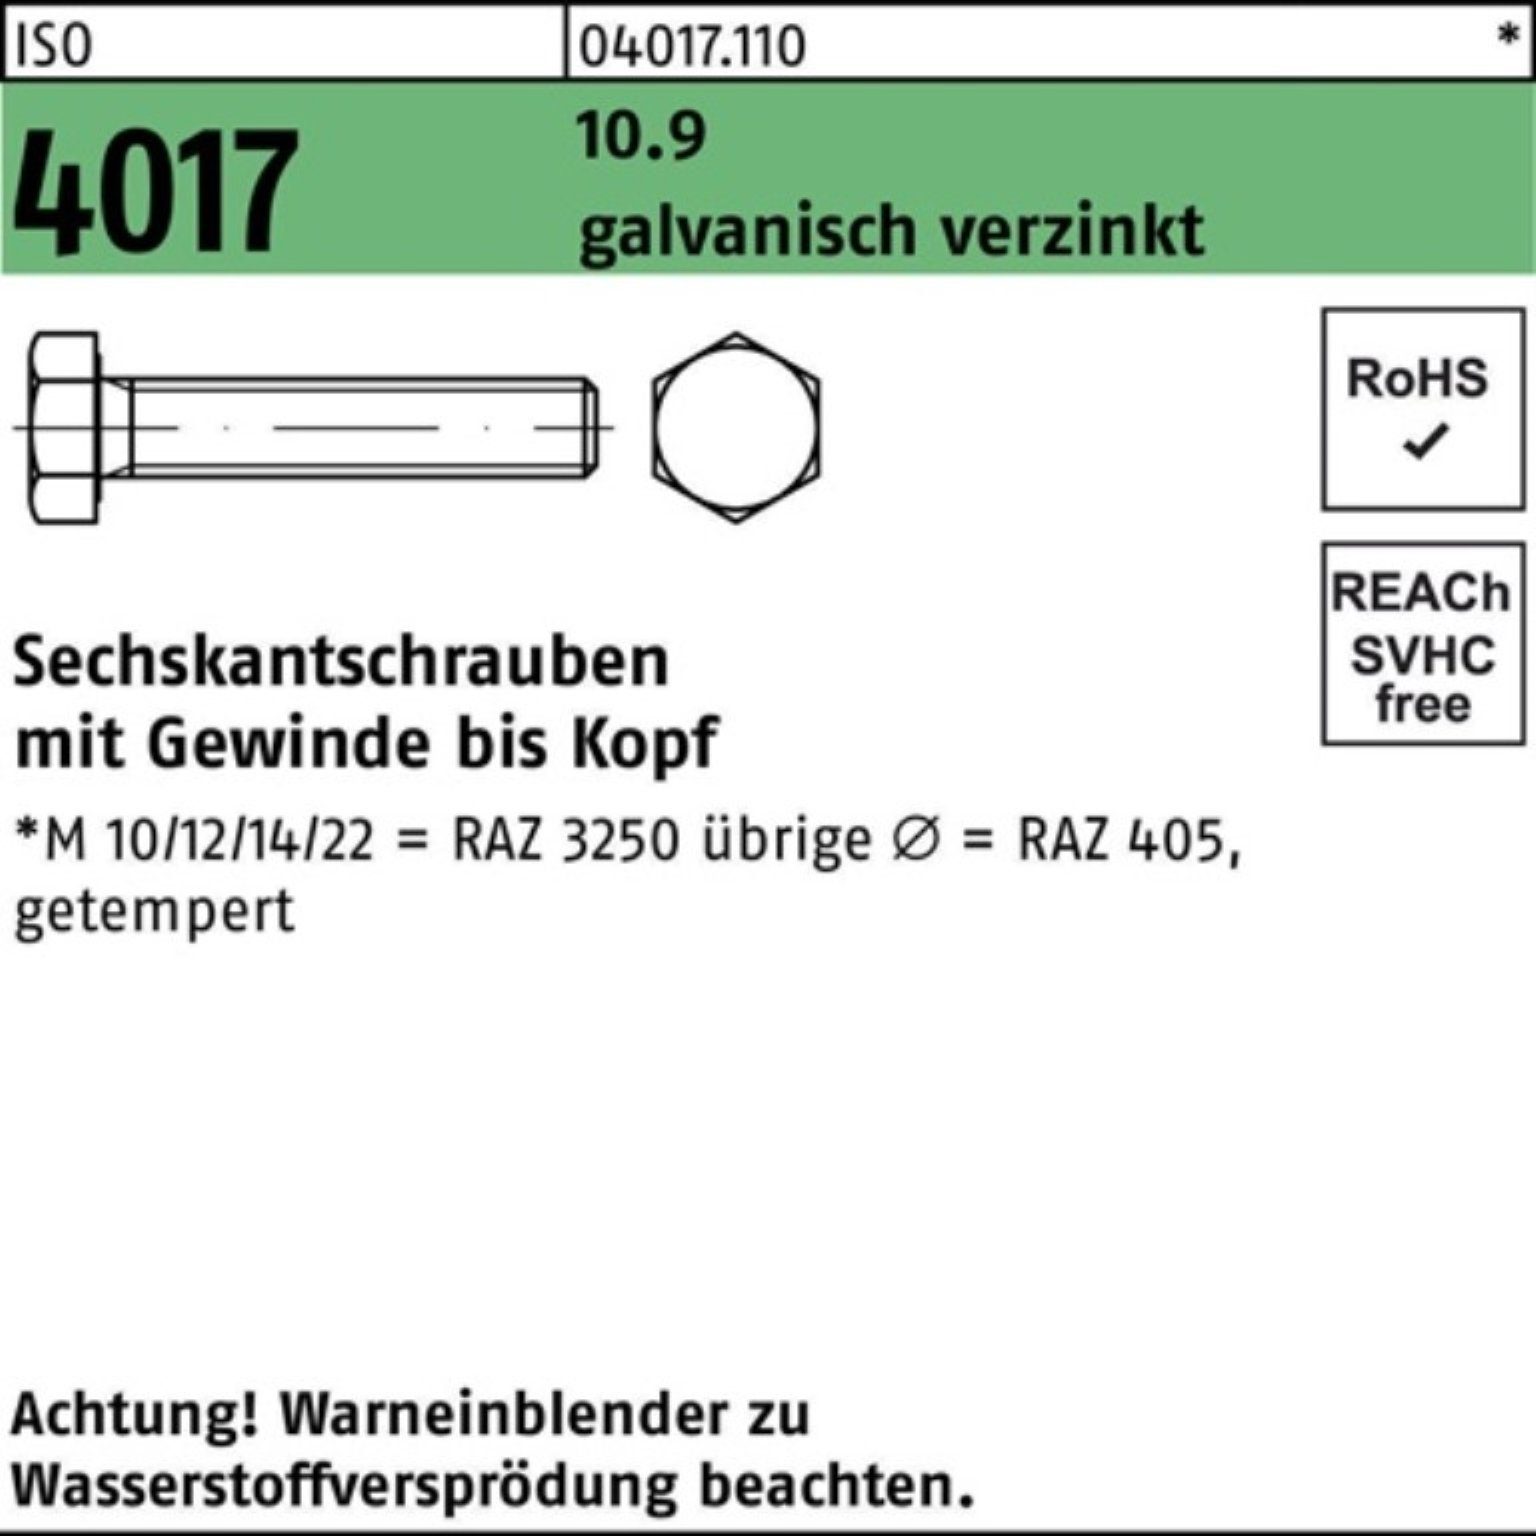 ISO Sechskantschraube Pack 10.9 VG 150 galv.verz. 50 Sechskantschraube 100er Bufab M12x 4017 S